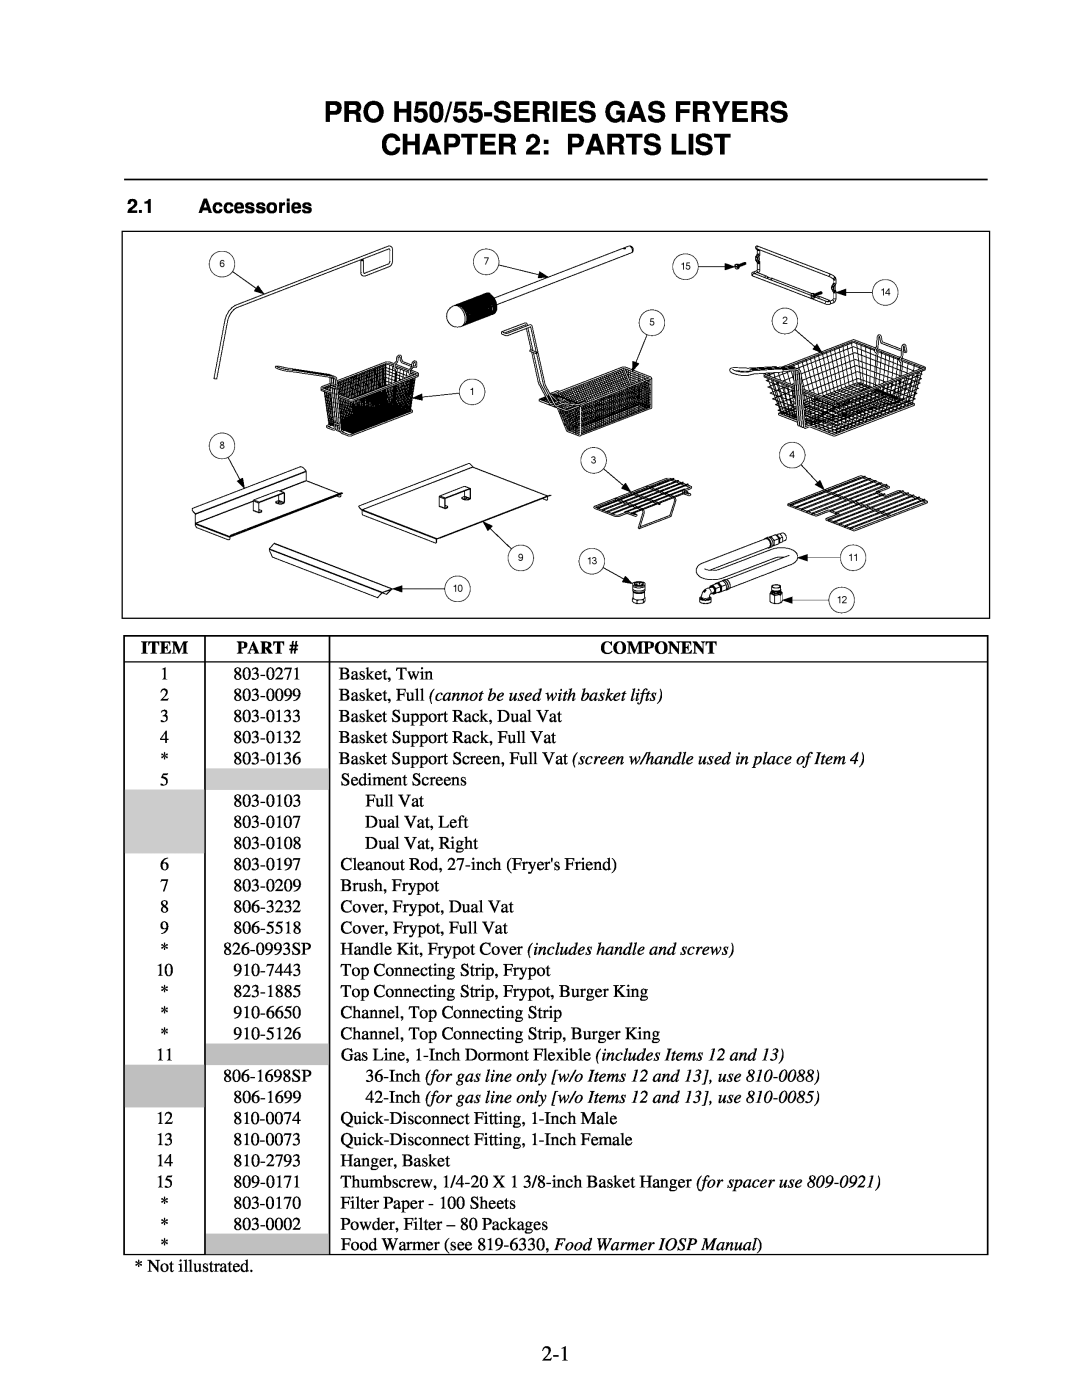 Frymaster manual PRO H50/55-SERIESGAS FRYERS : PARTS LIST, Accessories, Item, Part #, Component 